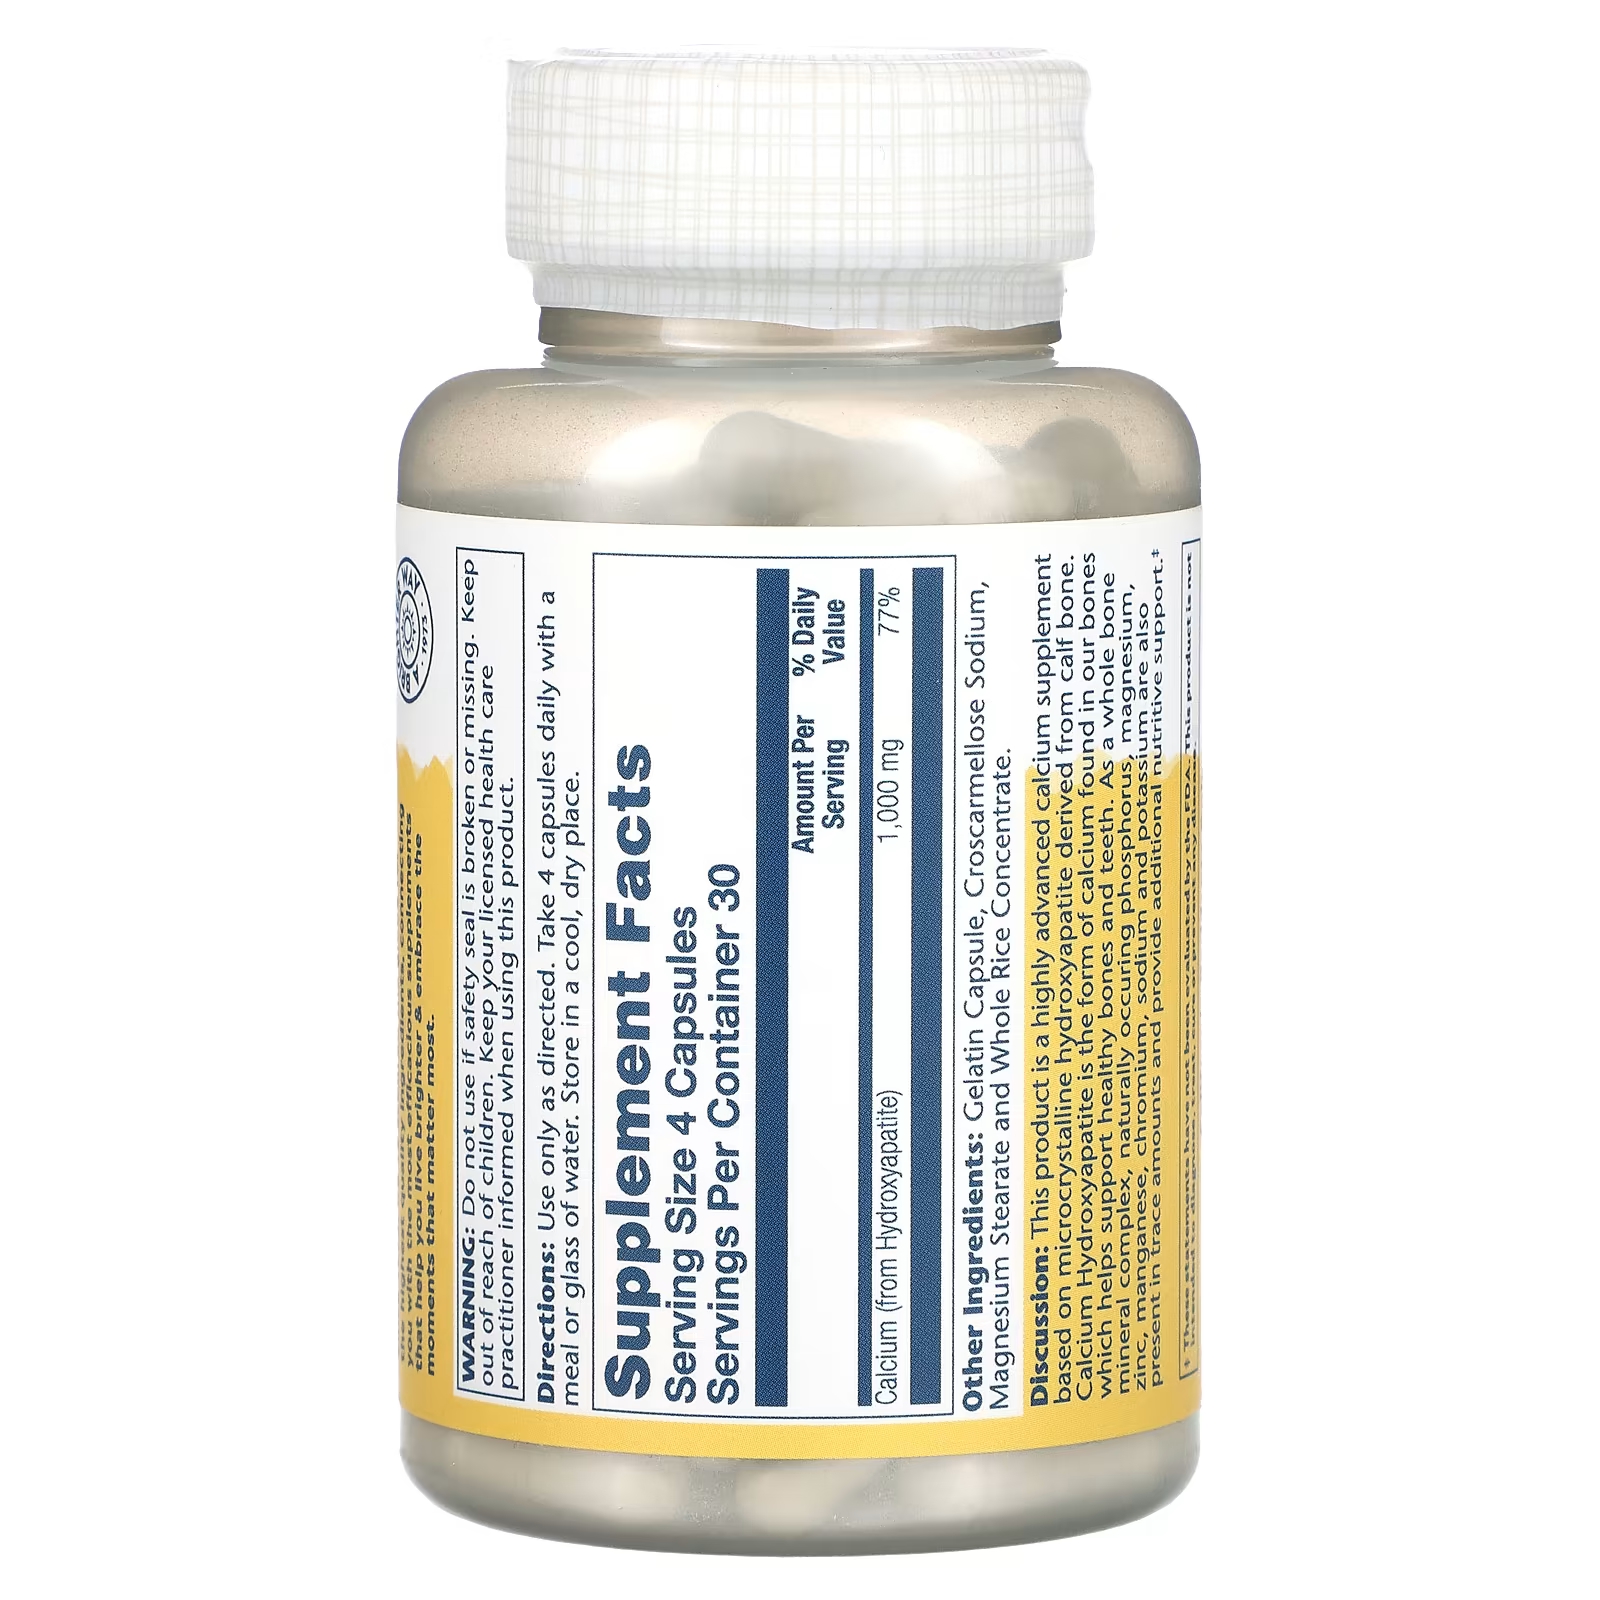 Solaray Гидроксиапатит кальция 1000 мг 120 капсул (250 мг на капсулу)